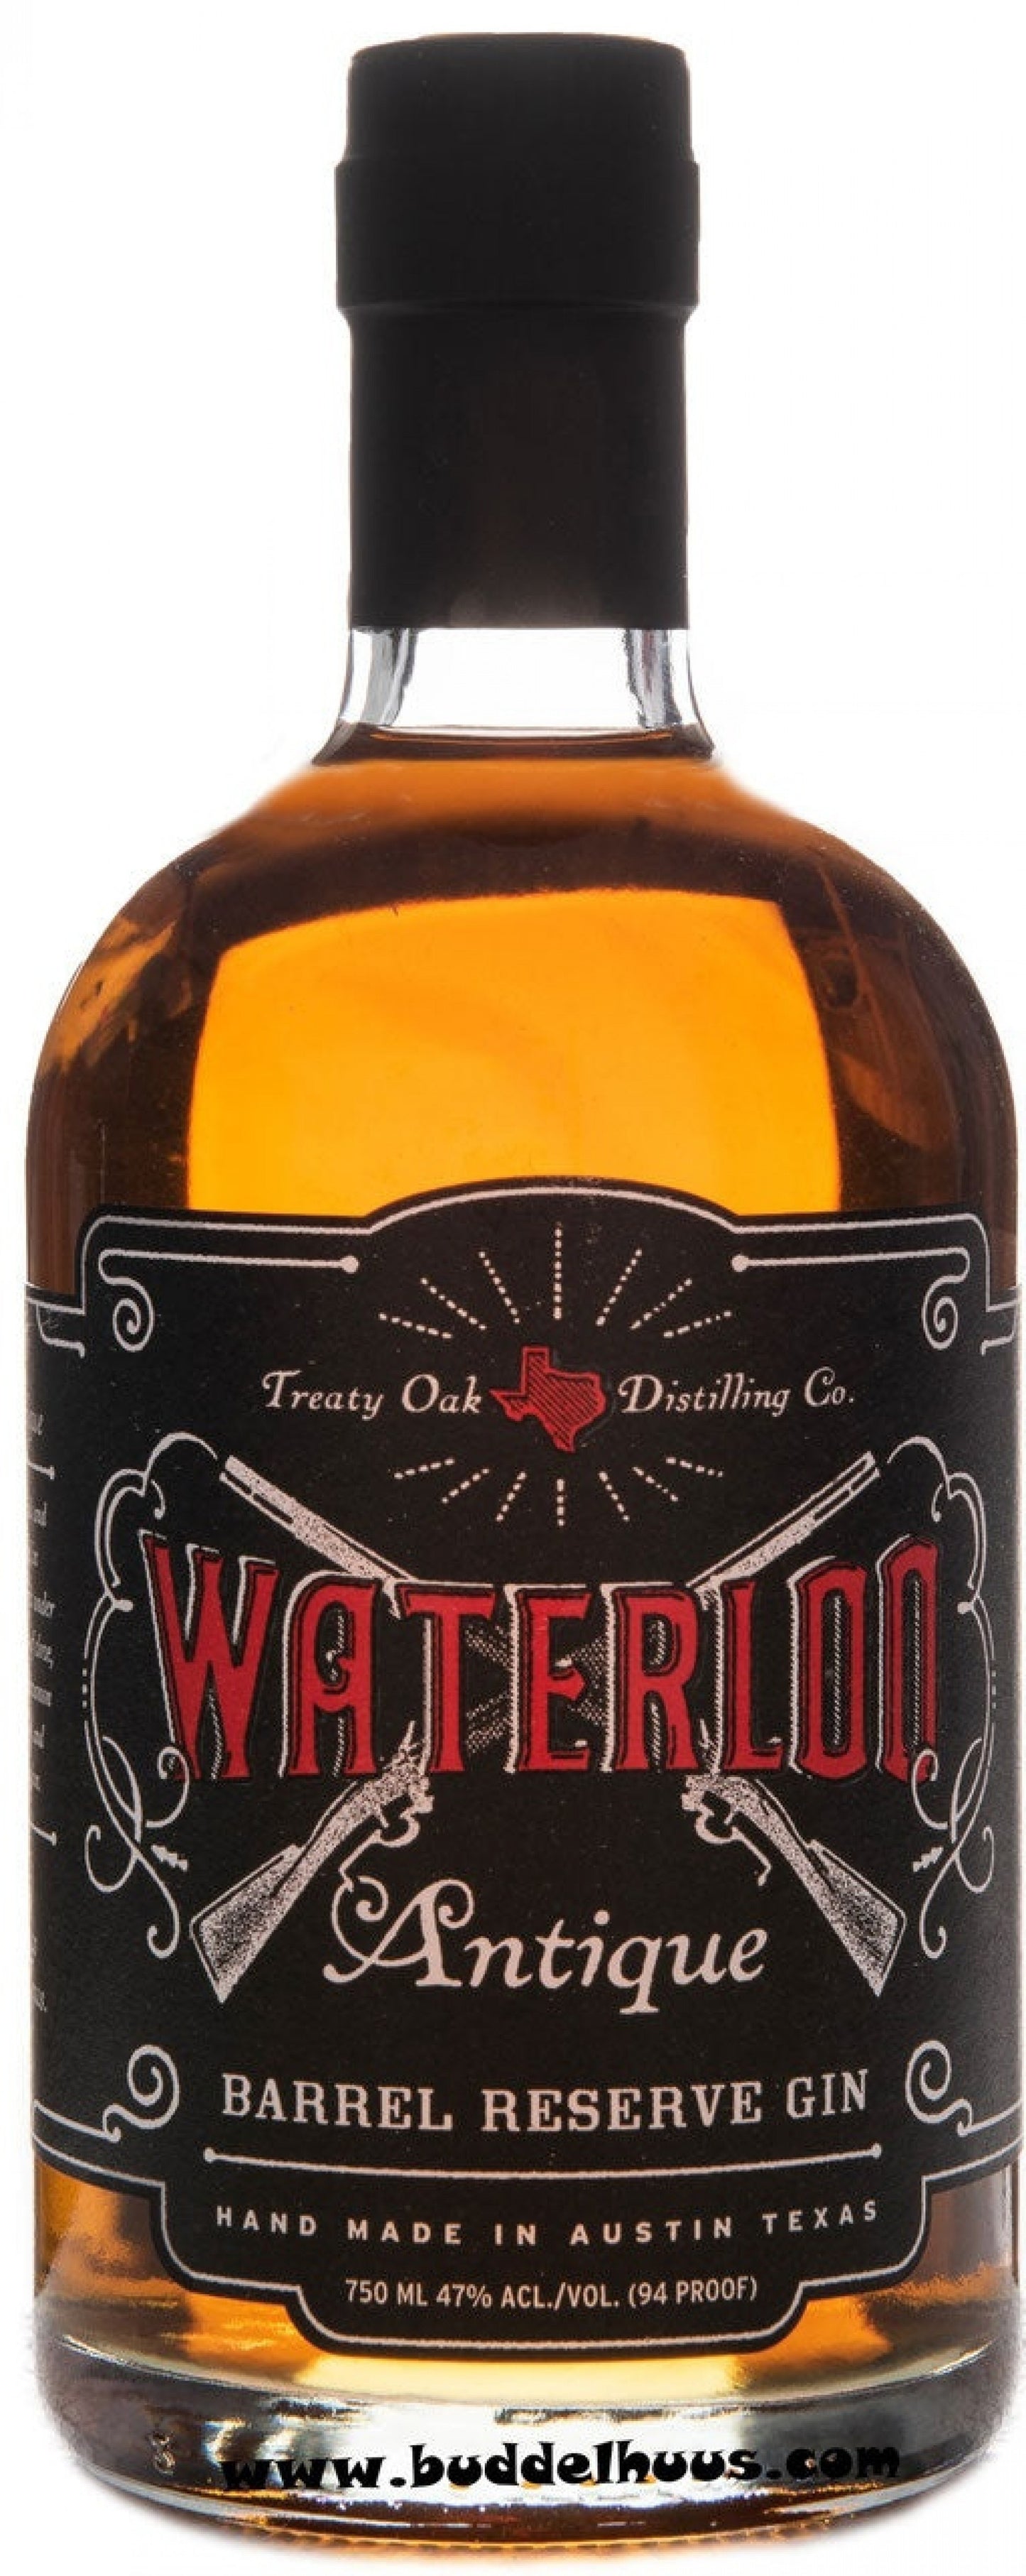 Waterloo Antique Gin